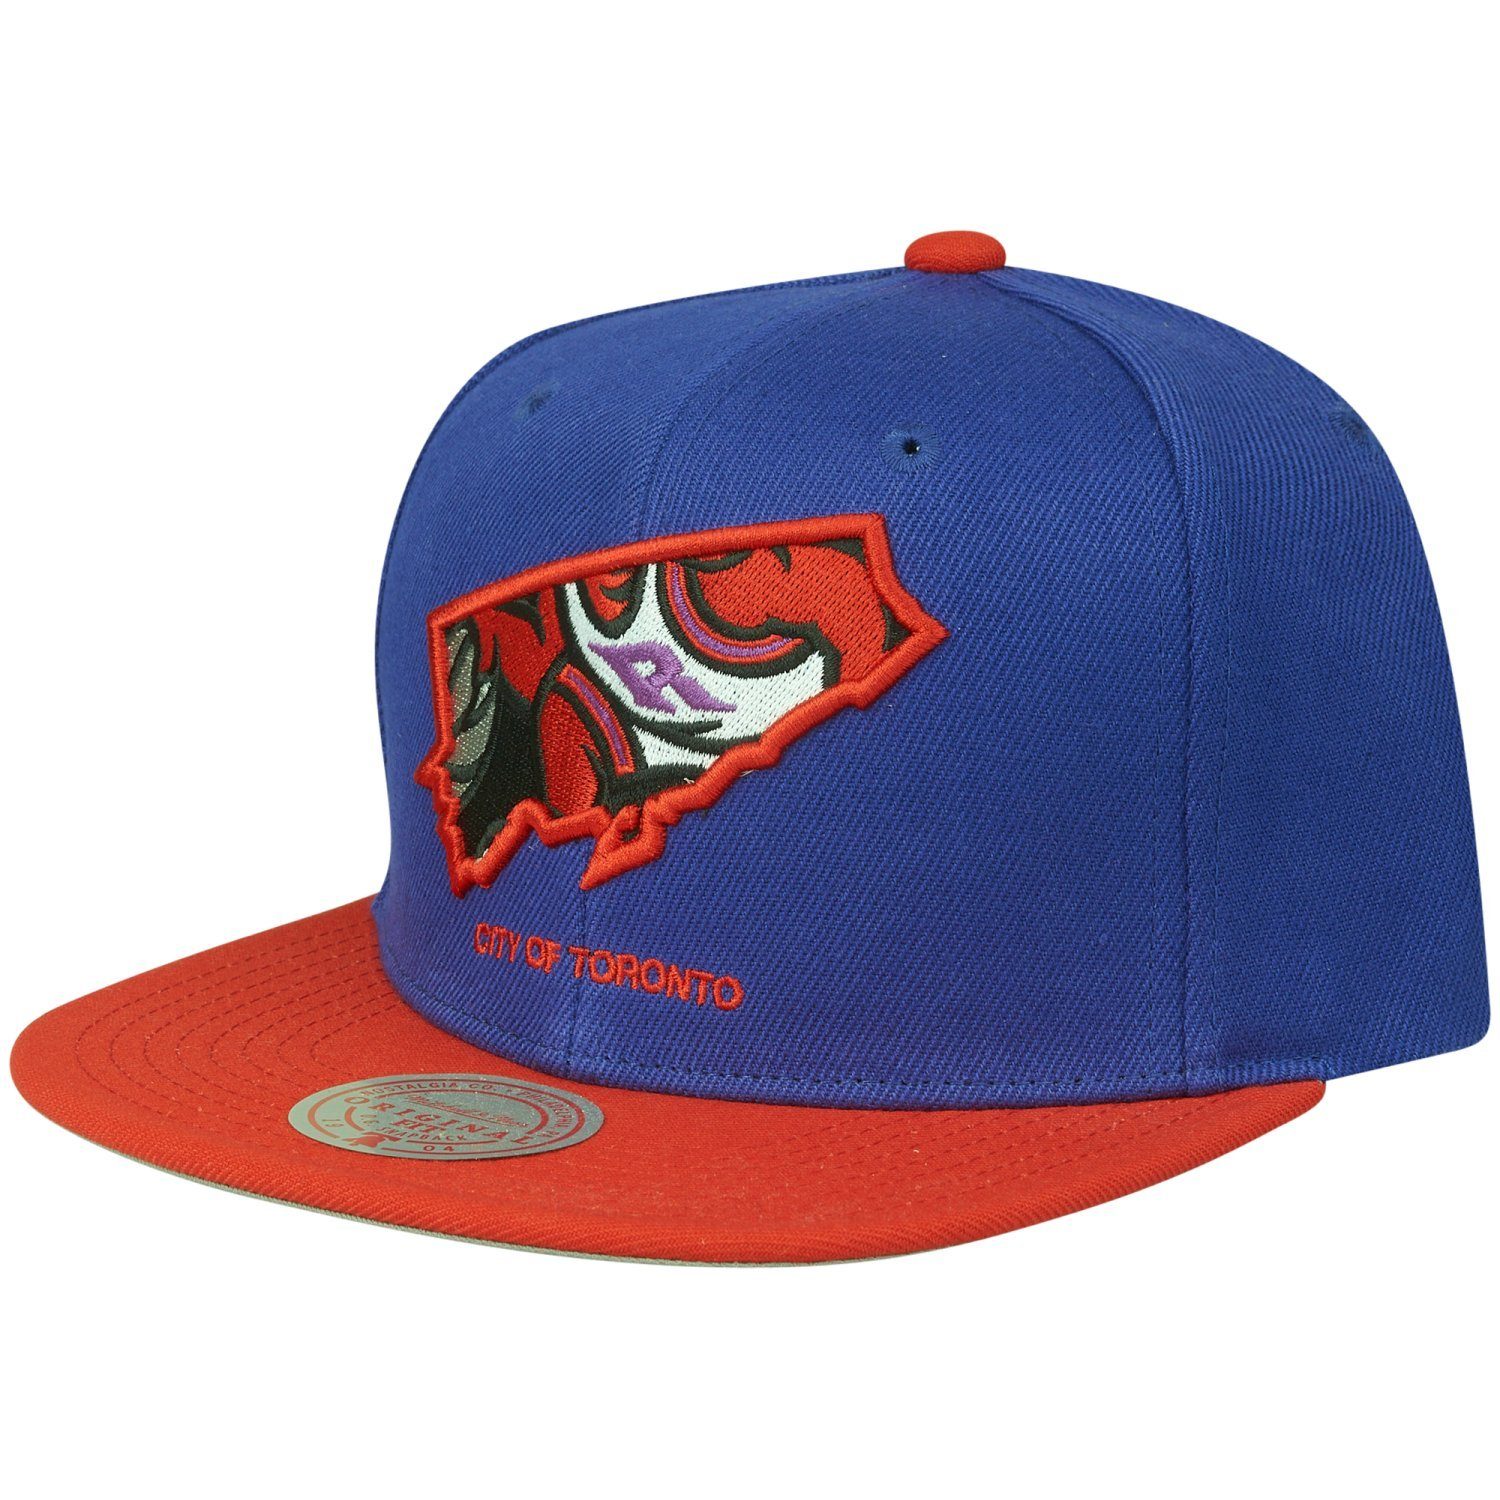 Mitchell & Ness Snapback Cap TEAM INSIDER Toronto Raptors